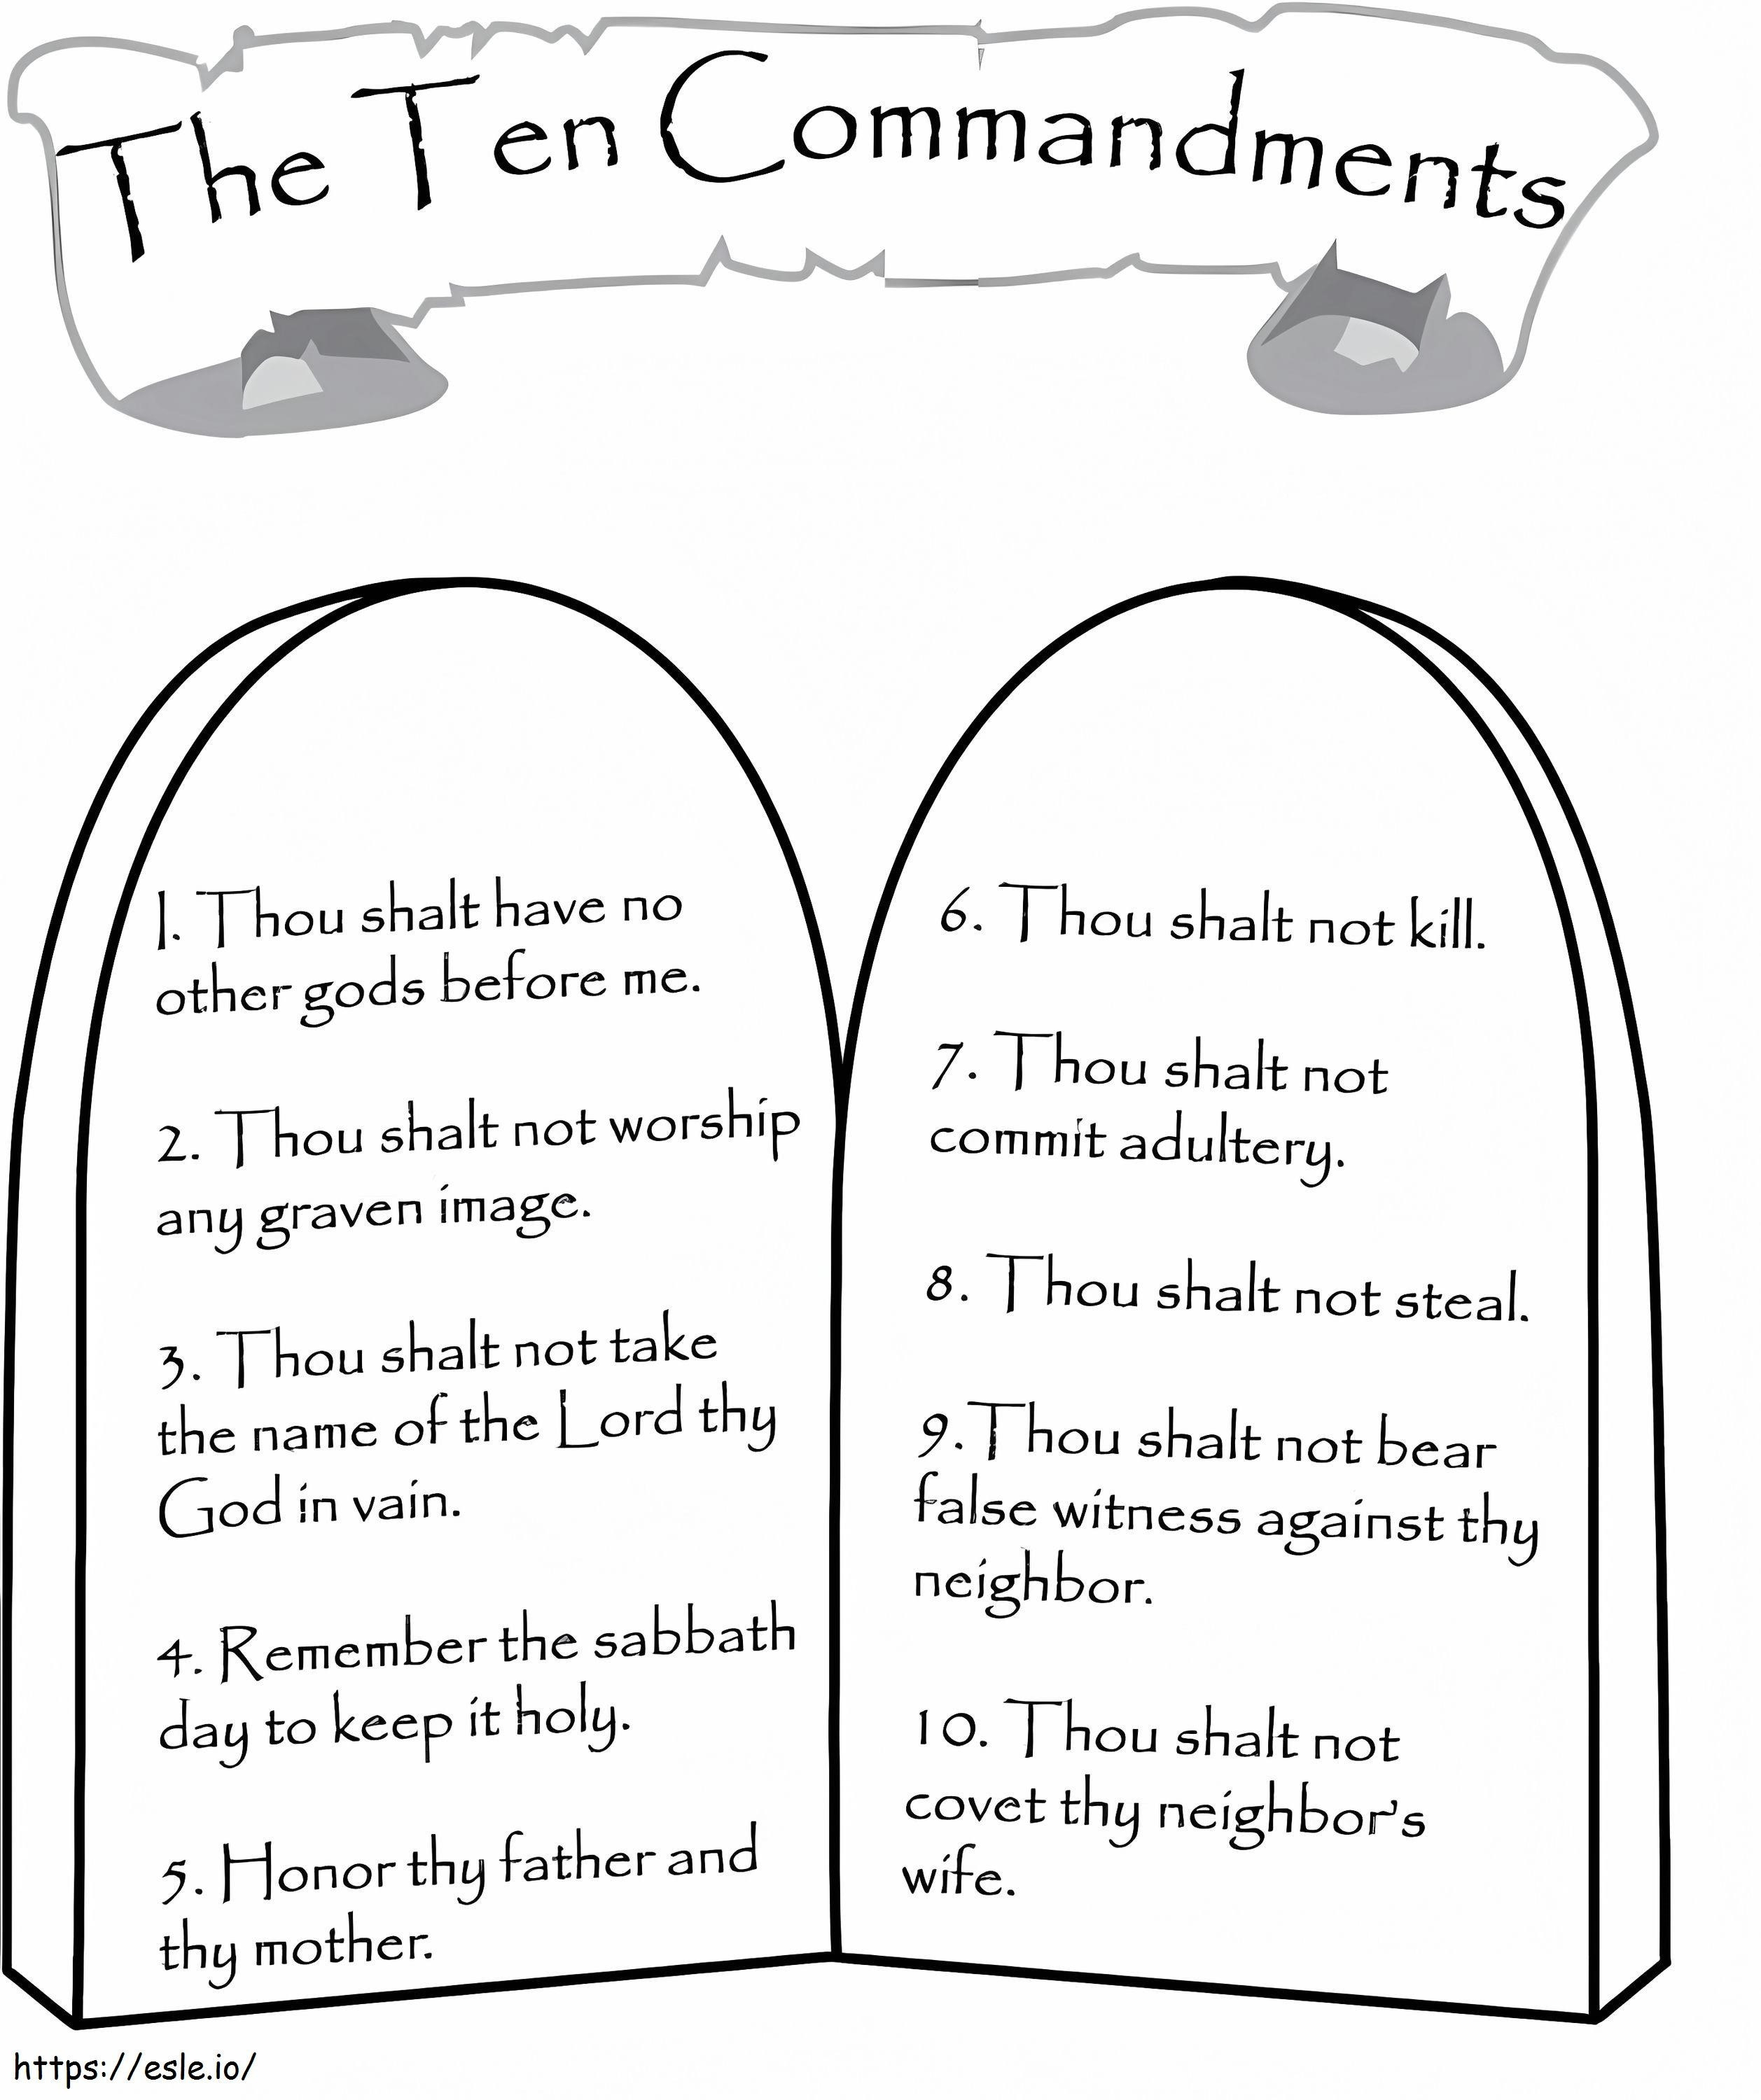 The Ten Commandments coloring page